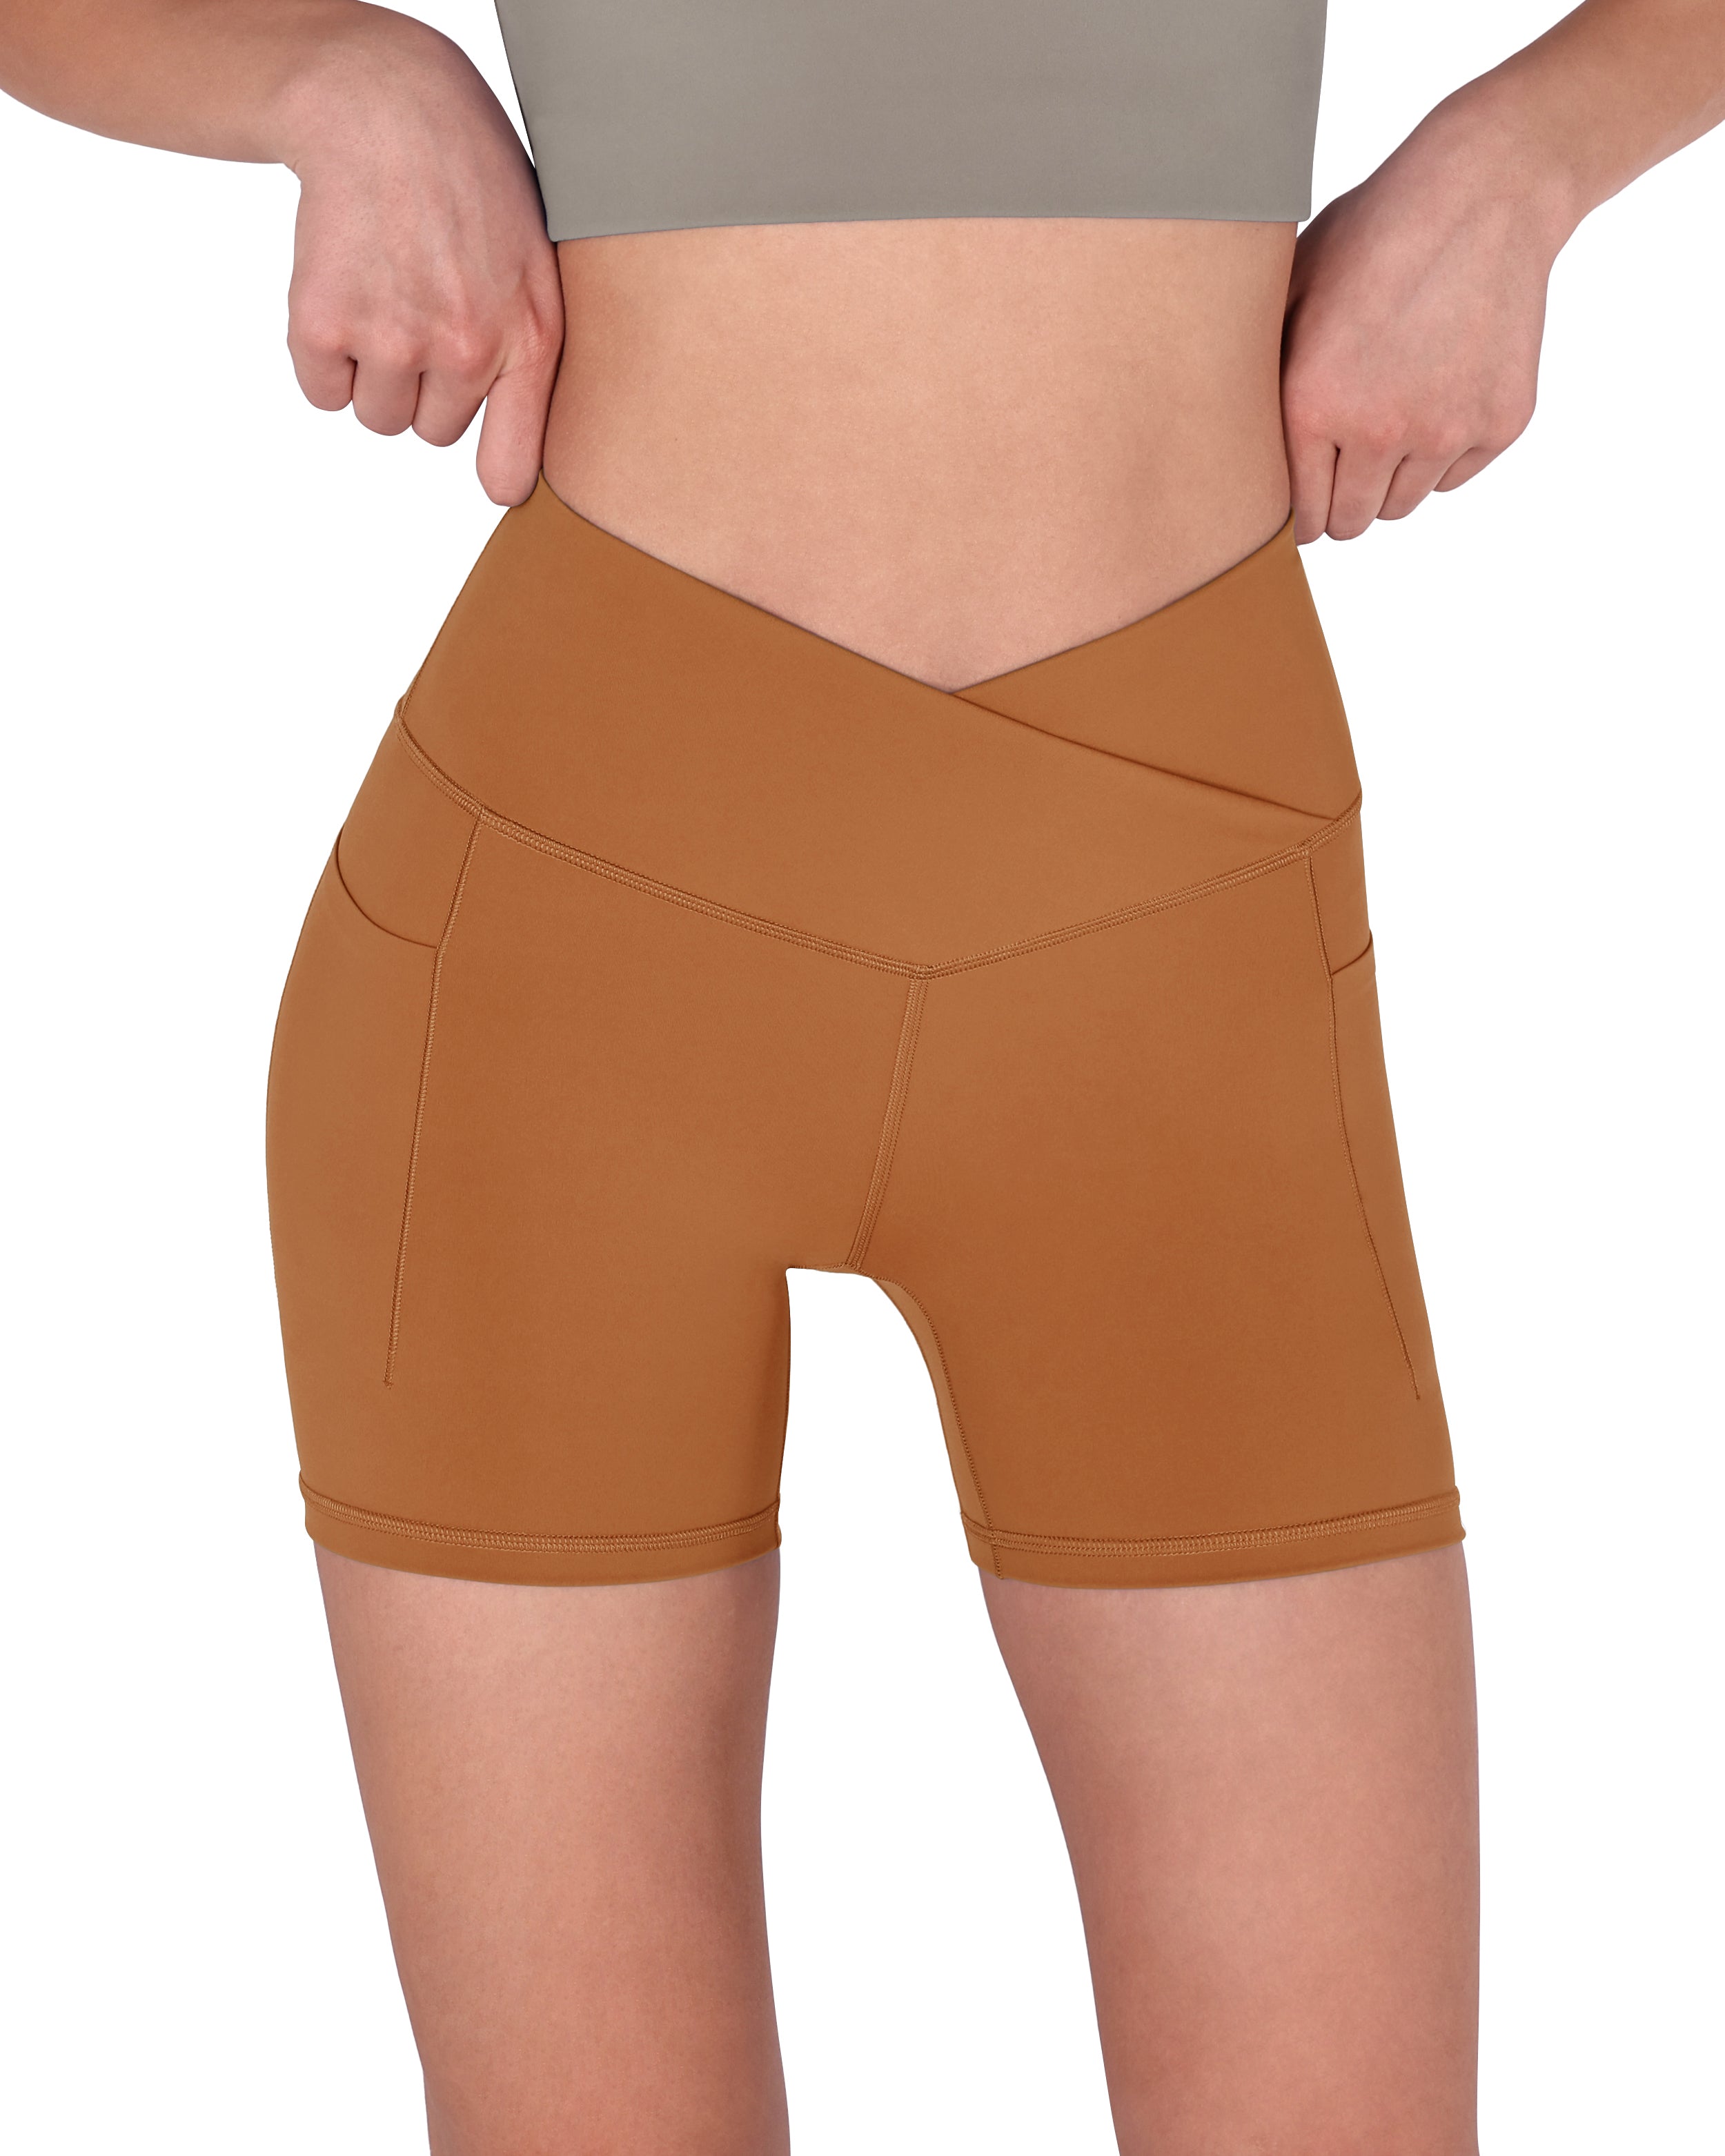 5" Cross Waist Biker Shorts with Pockets Caramel - ododos